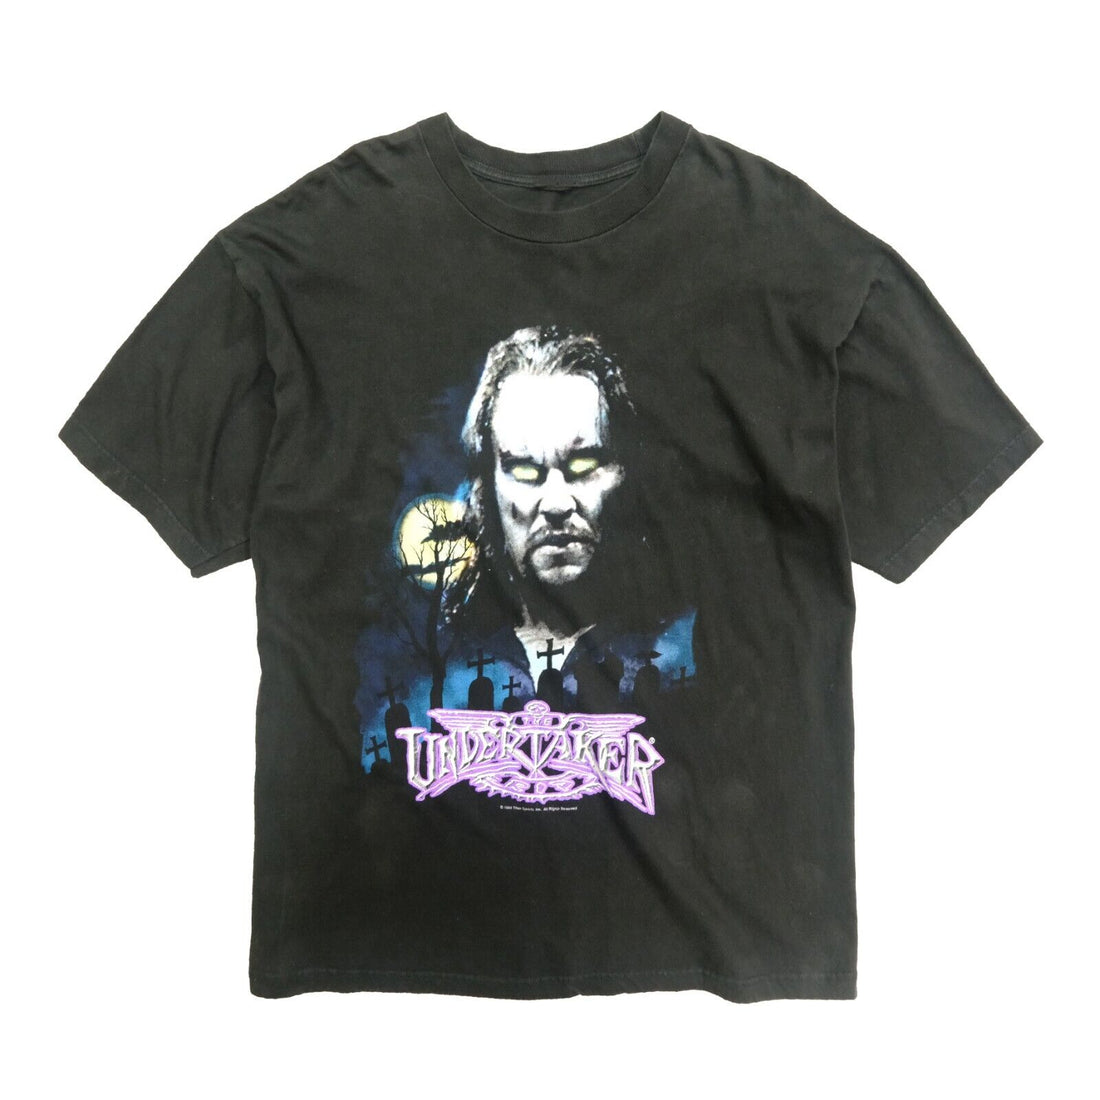 Vintage The Undertaker T-Shirt Size XL 1998 90s Wrestling WWE WWF